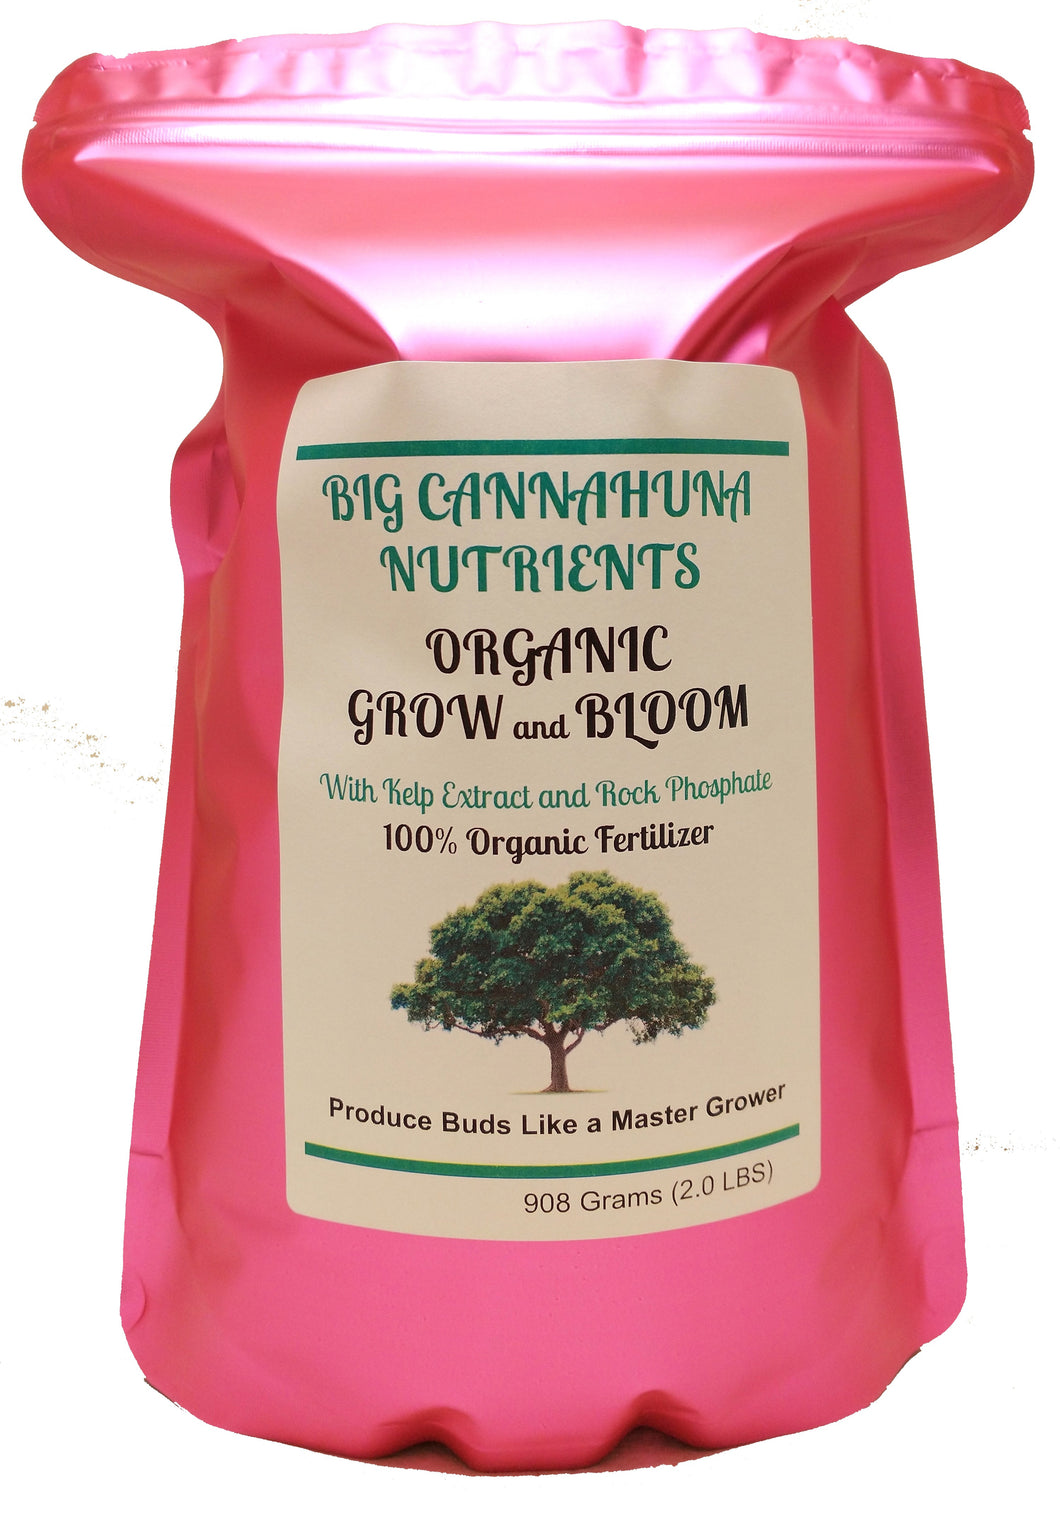 Big Cannahuna Nutrients Organic Grow and Bloom